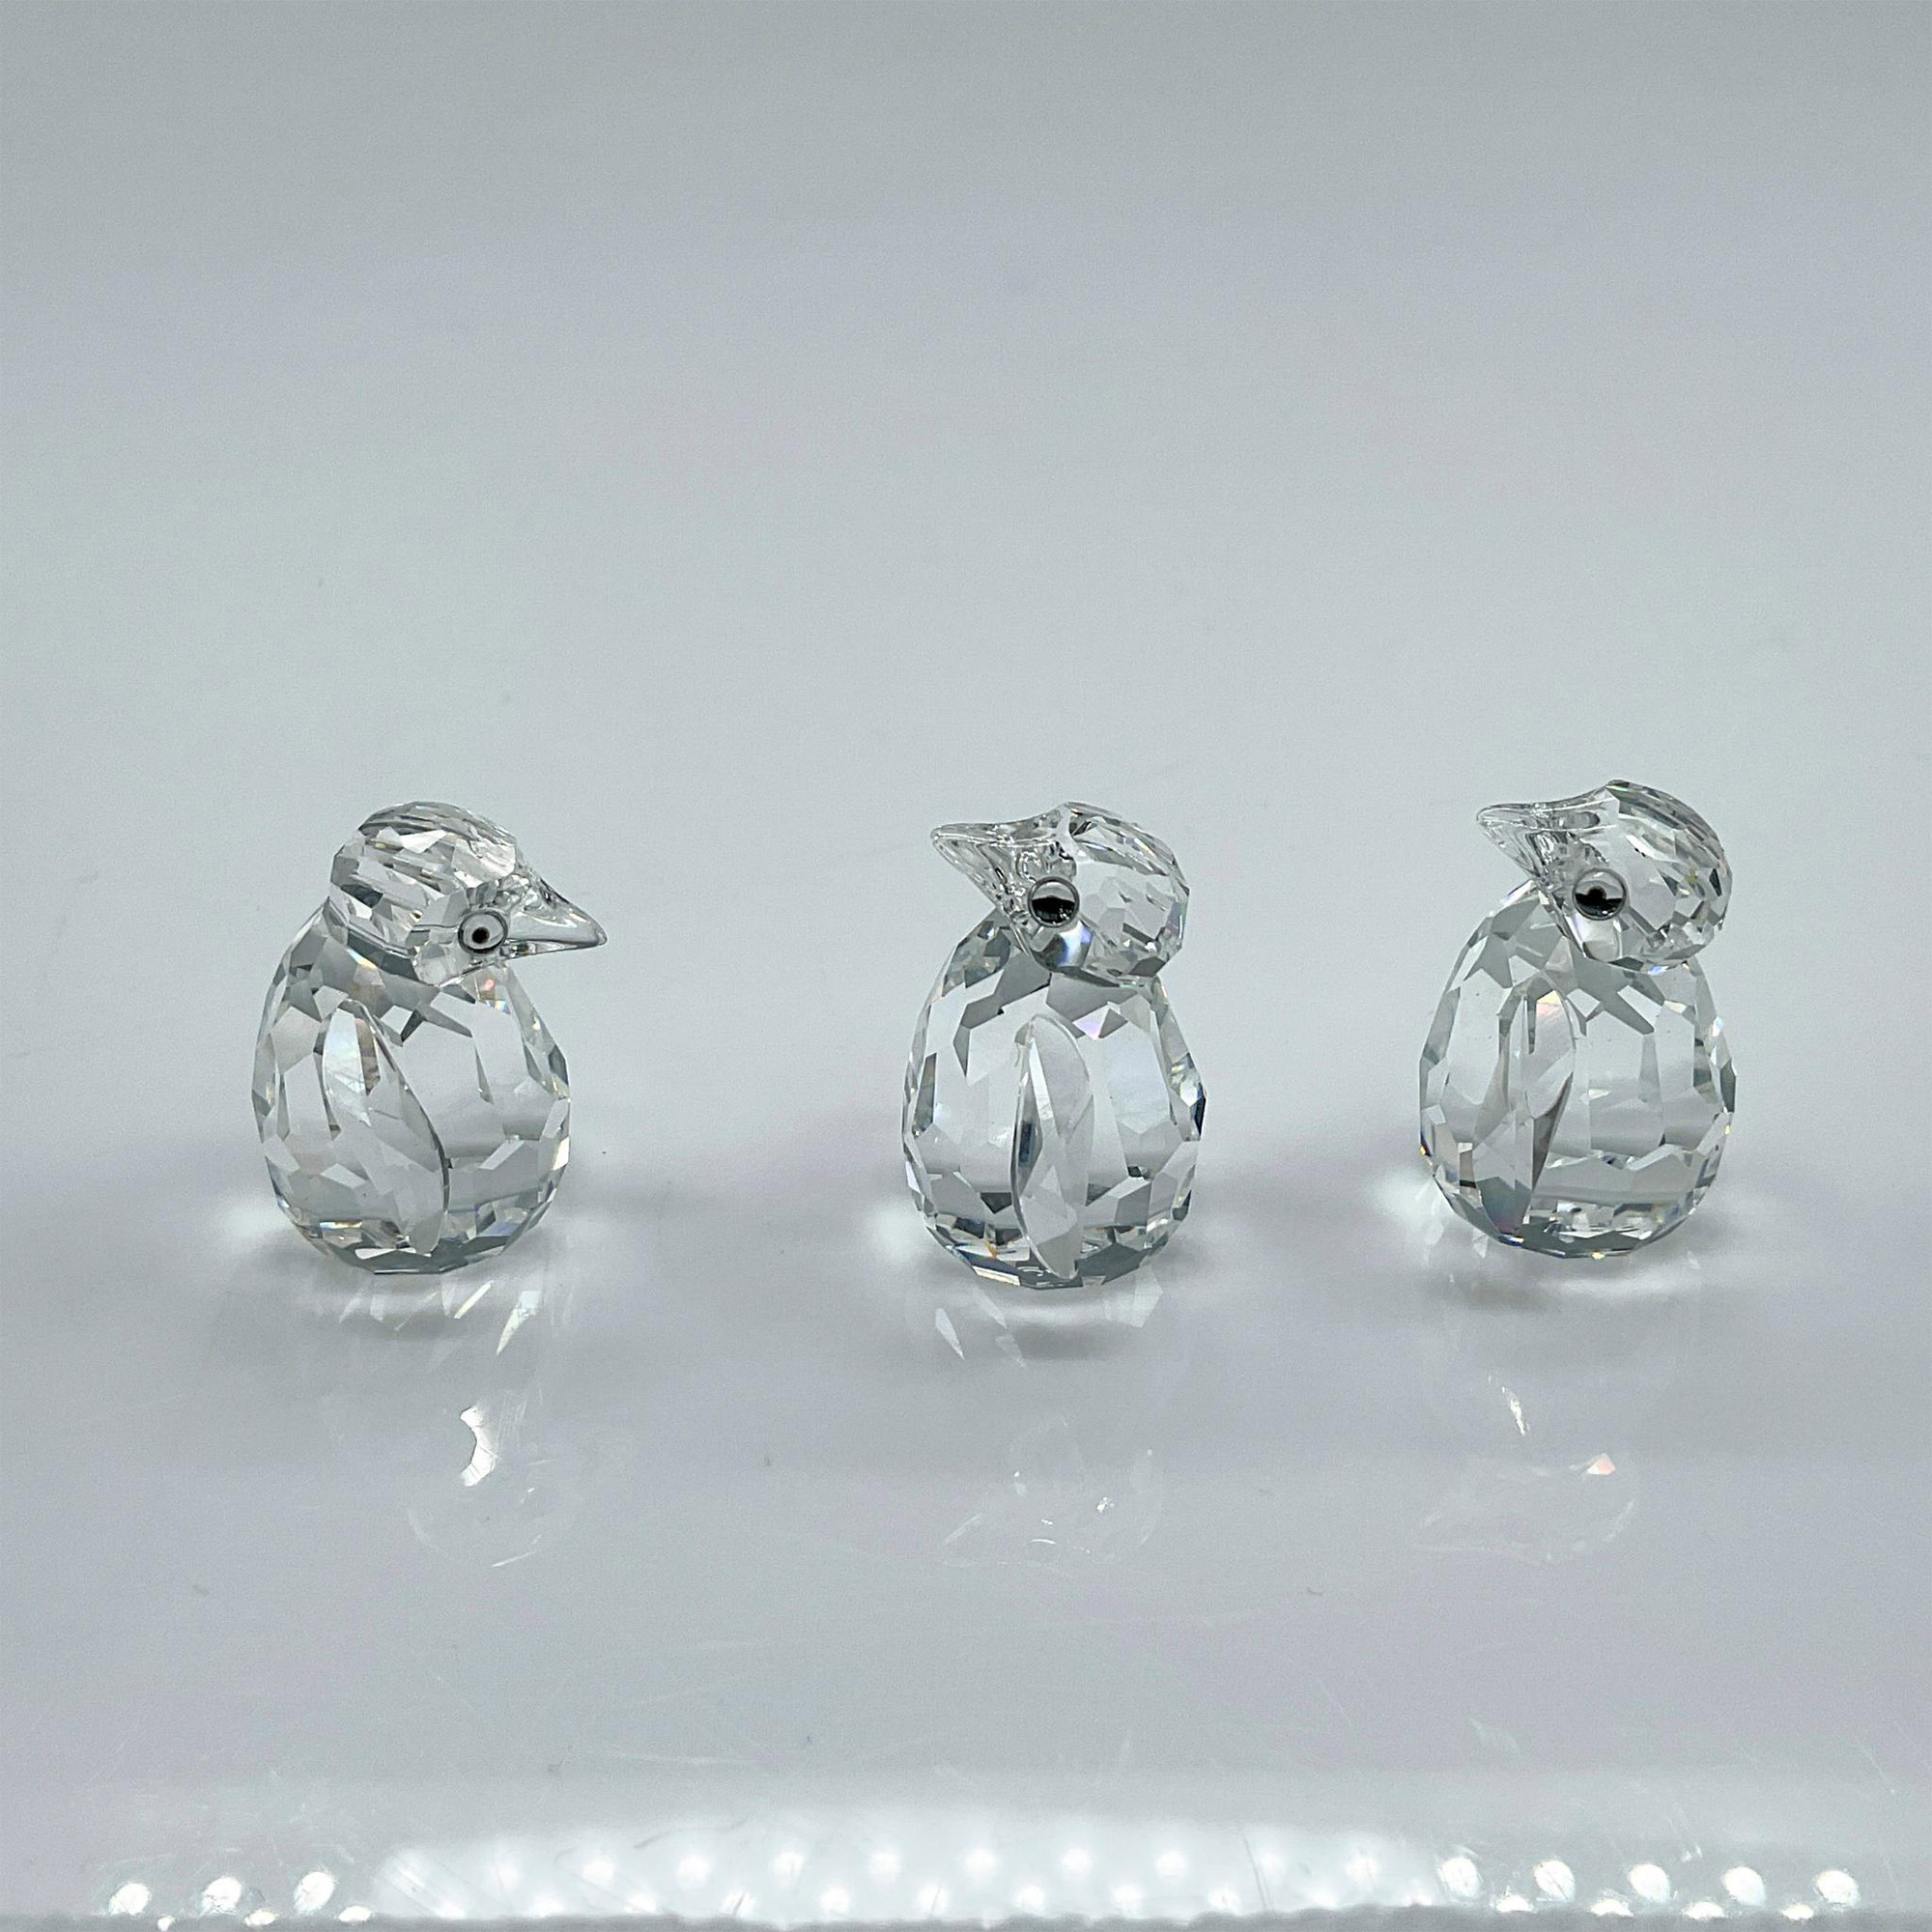 Swarovski Silver Crystal Figurines, Baby Penguins